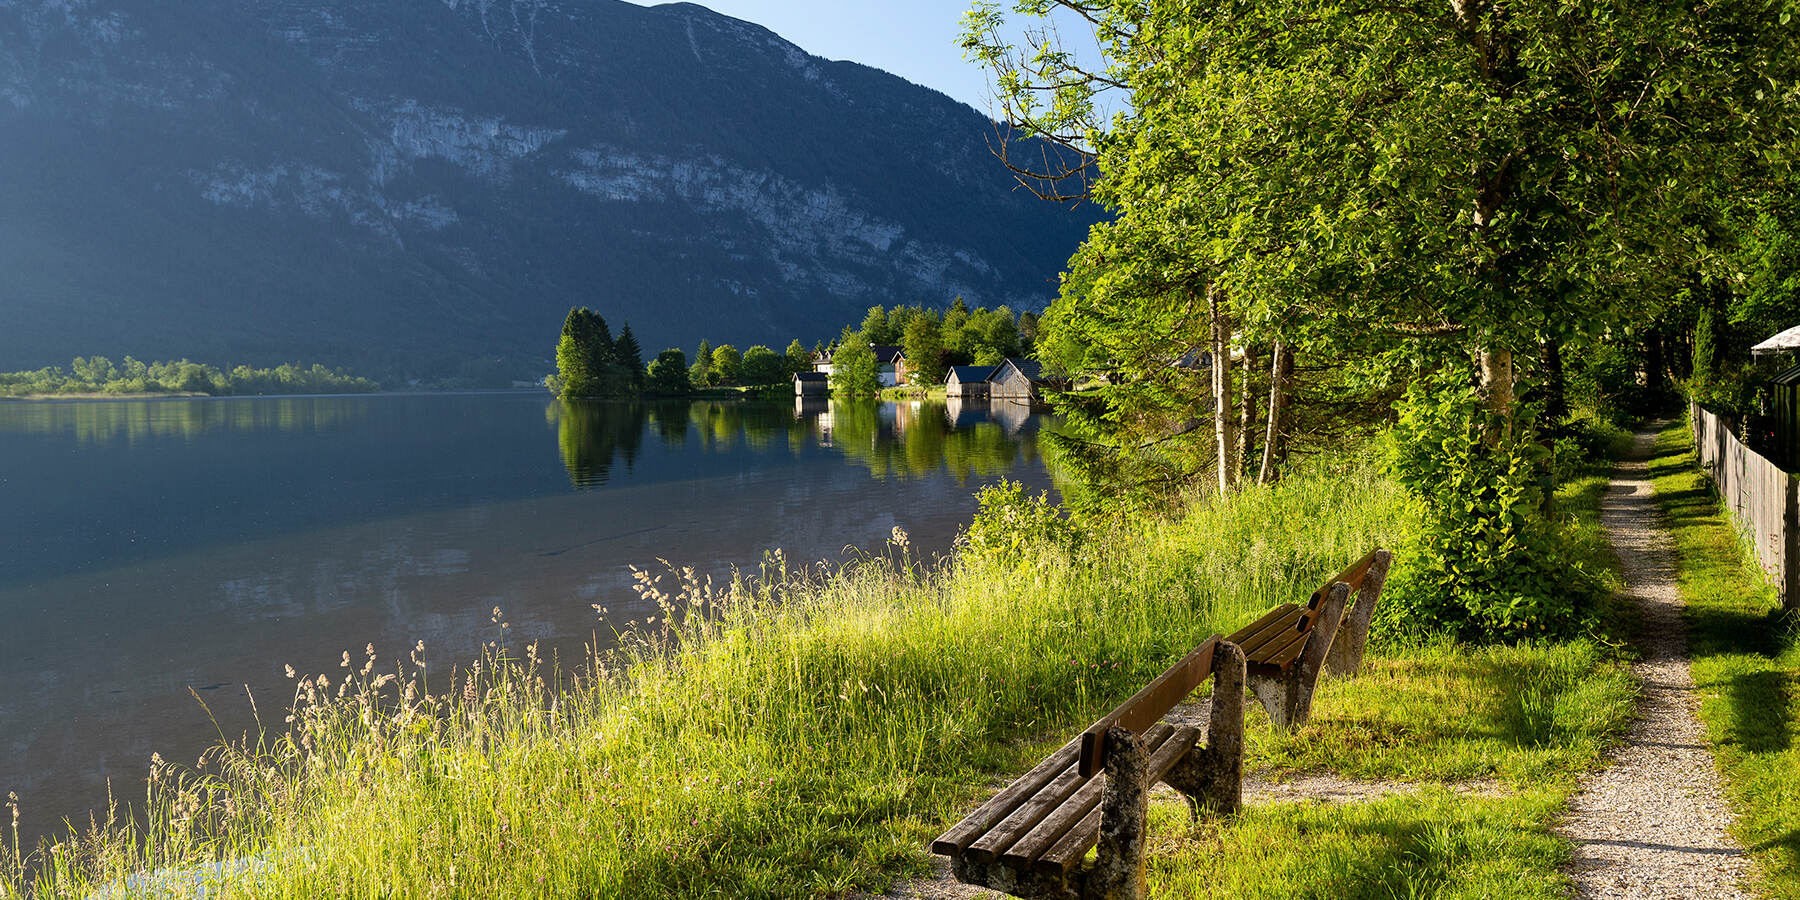 walkway at Lake Hallstatt with a bench